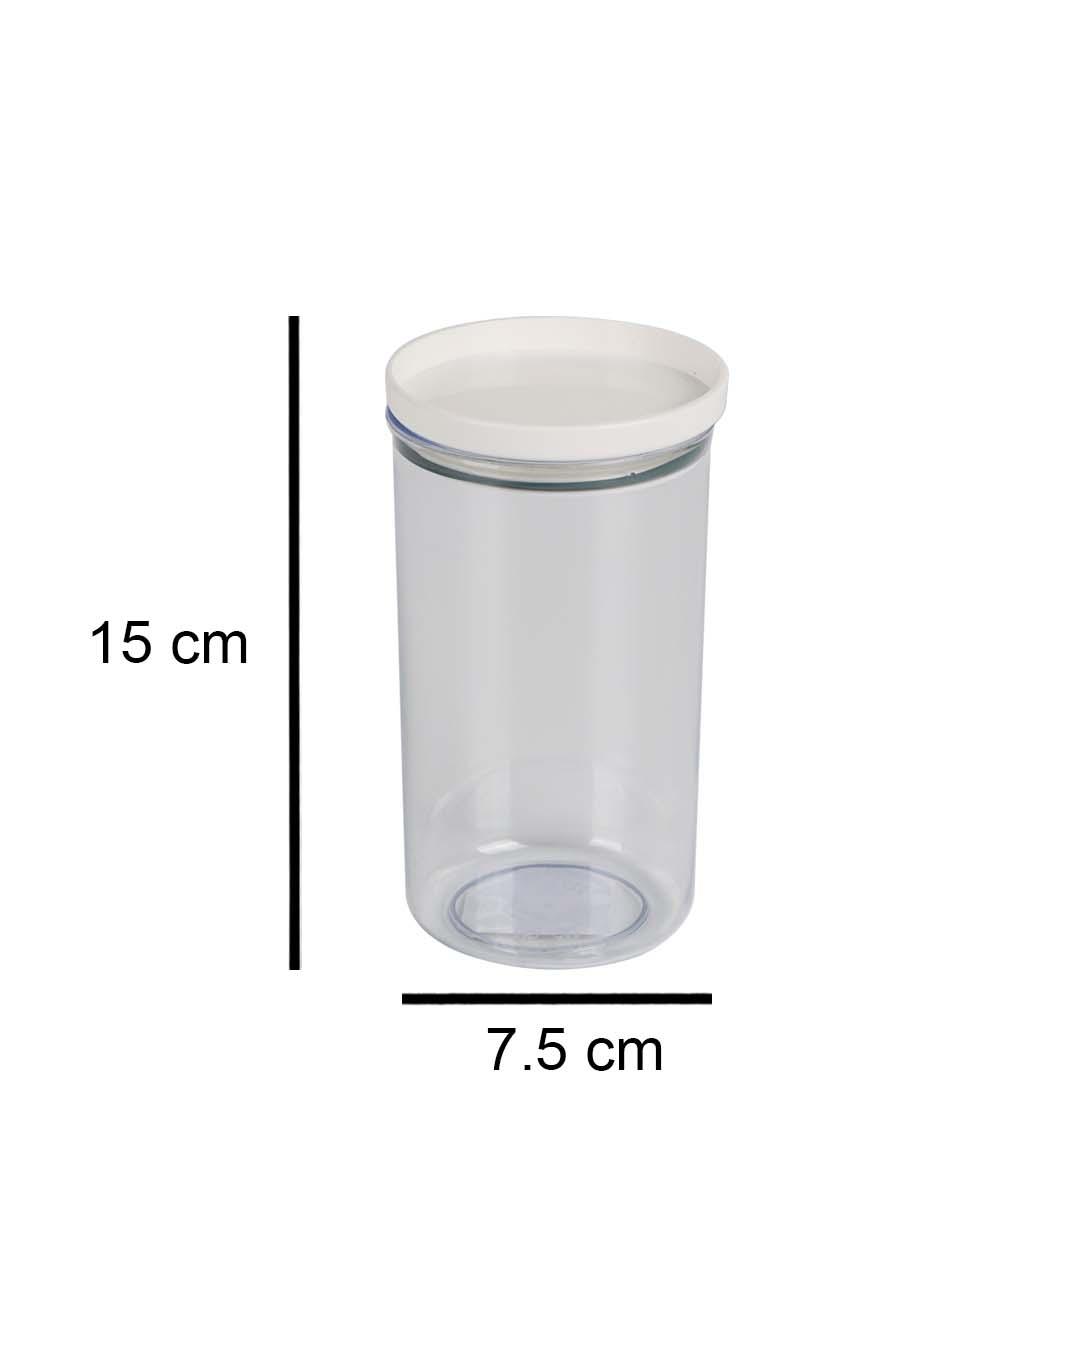 Kitchen Storage Jar with Airtight Lid, White, Plastic, 550 mL - MARKET 99